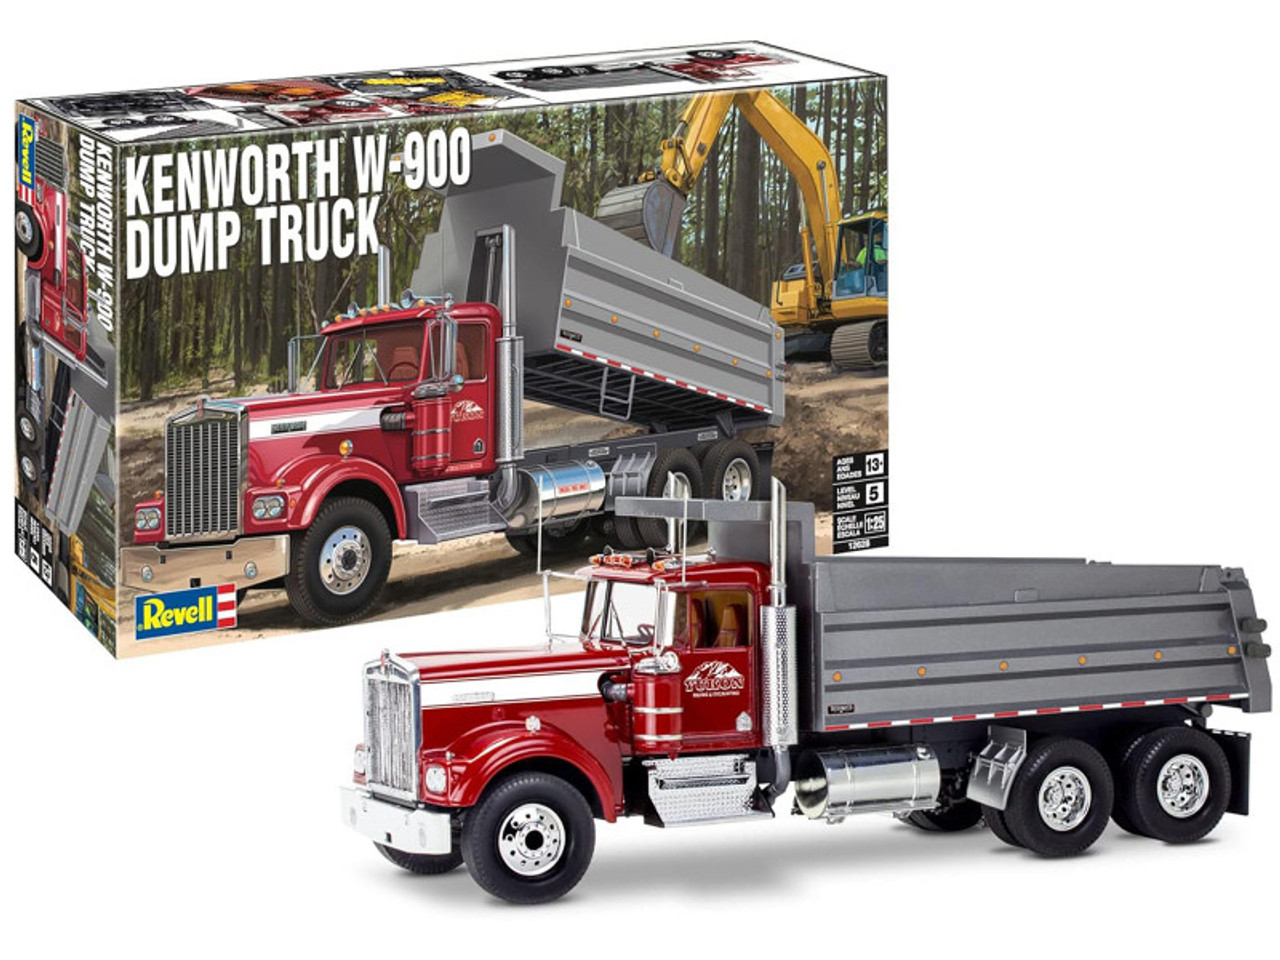 Level 5 Model Kit Kenworth W-900 Dump Truck 1/25 Scale Model by Revell